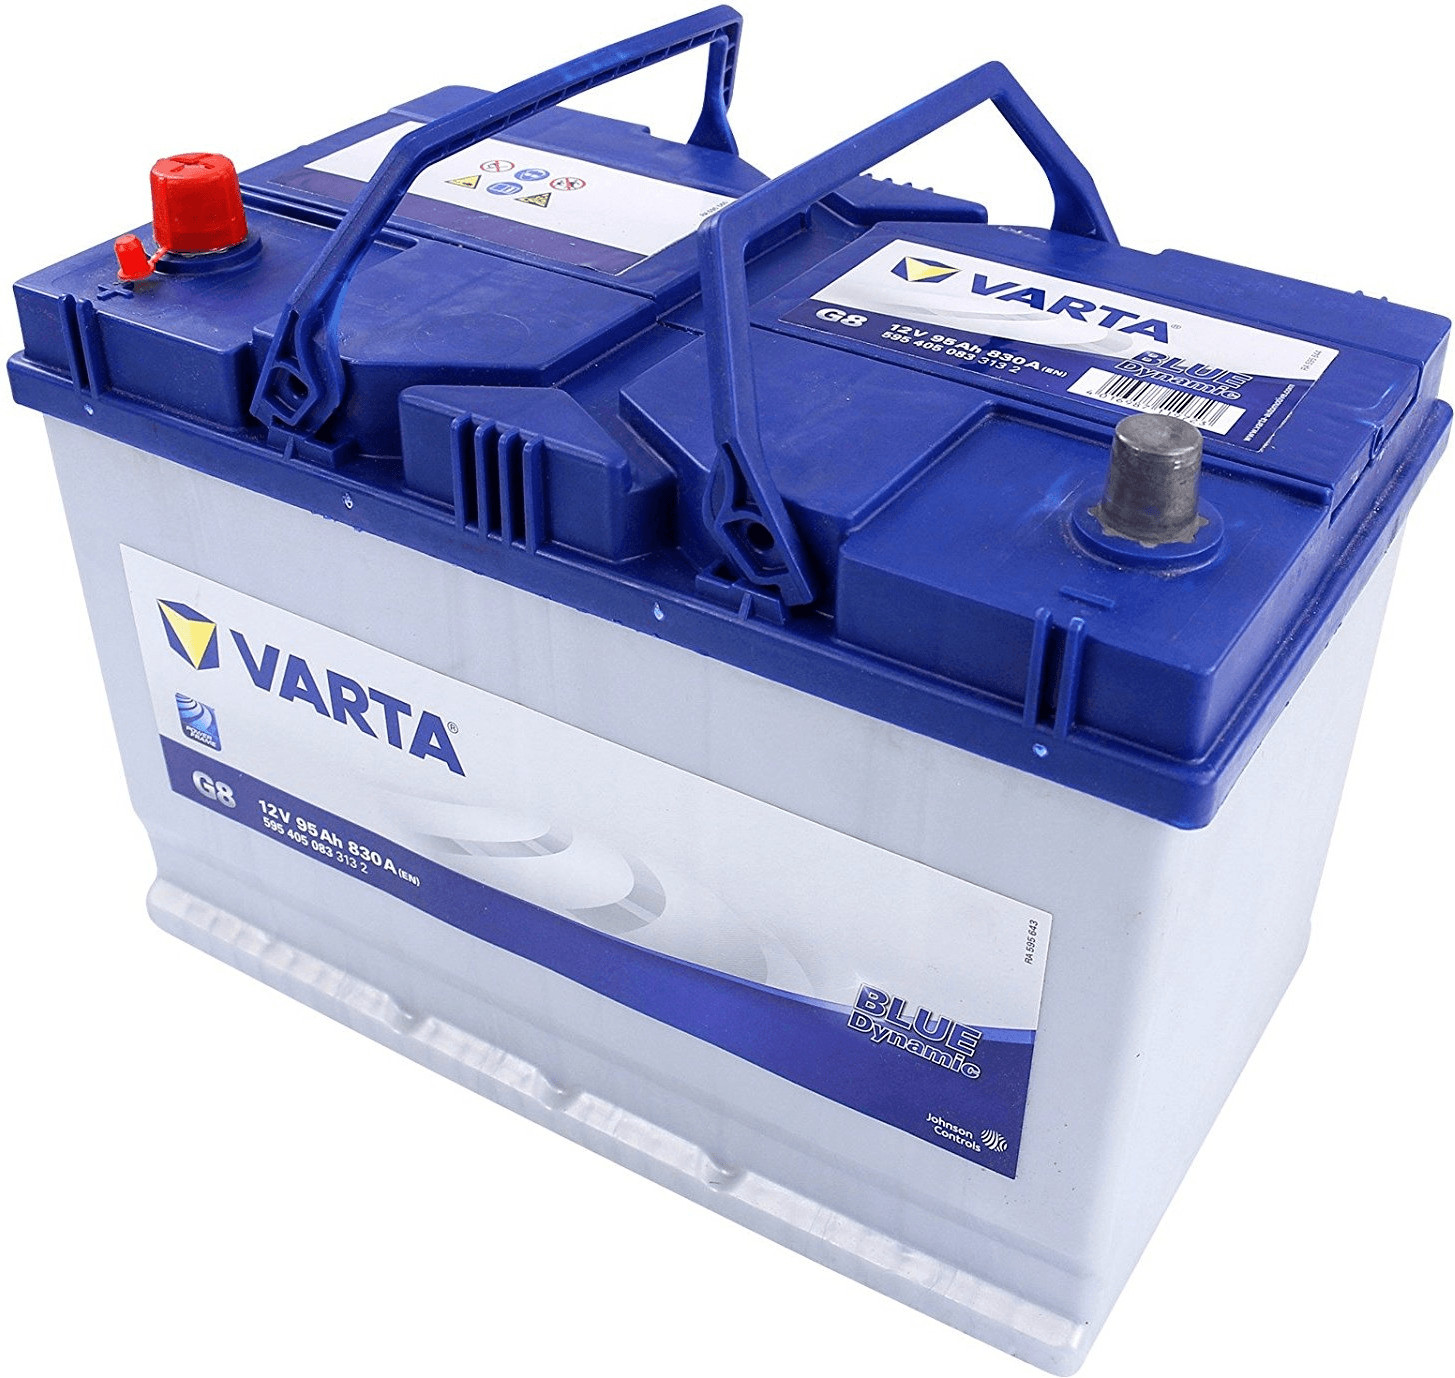 Batería Varta Blue Dynamic G8. 95Ah - 830A(EN) 12V. Caja D31  (306x173x225mm) - VT BATTERIES